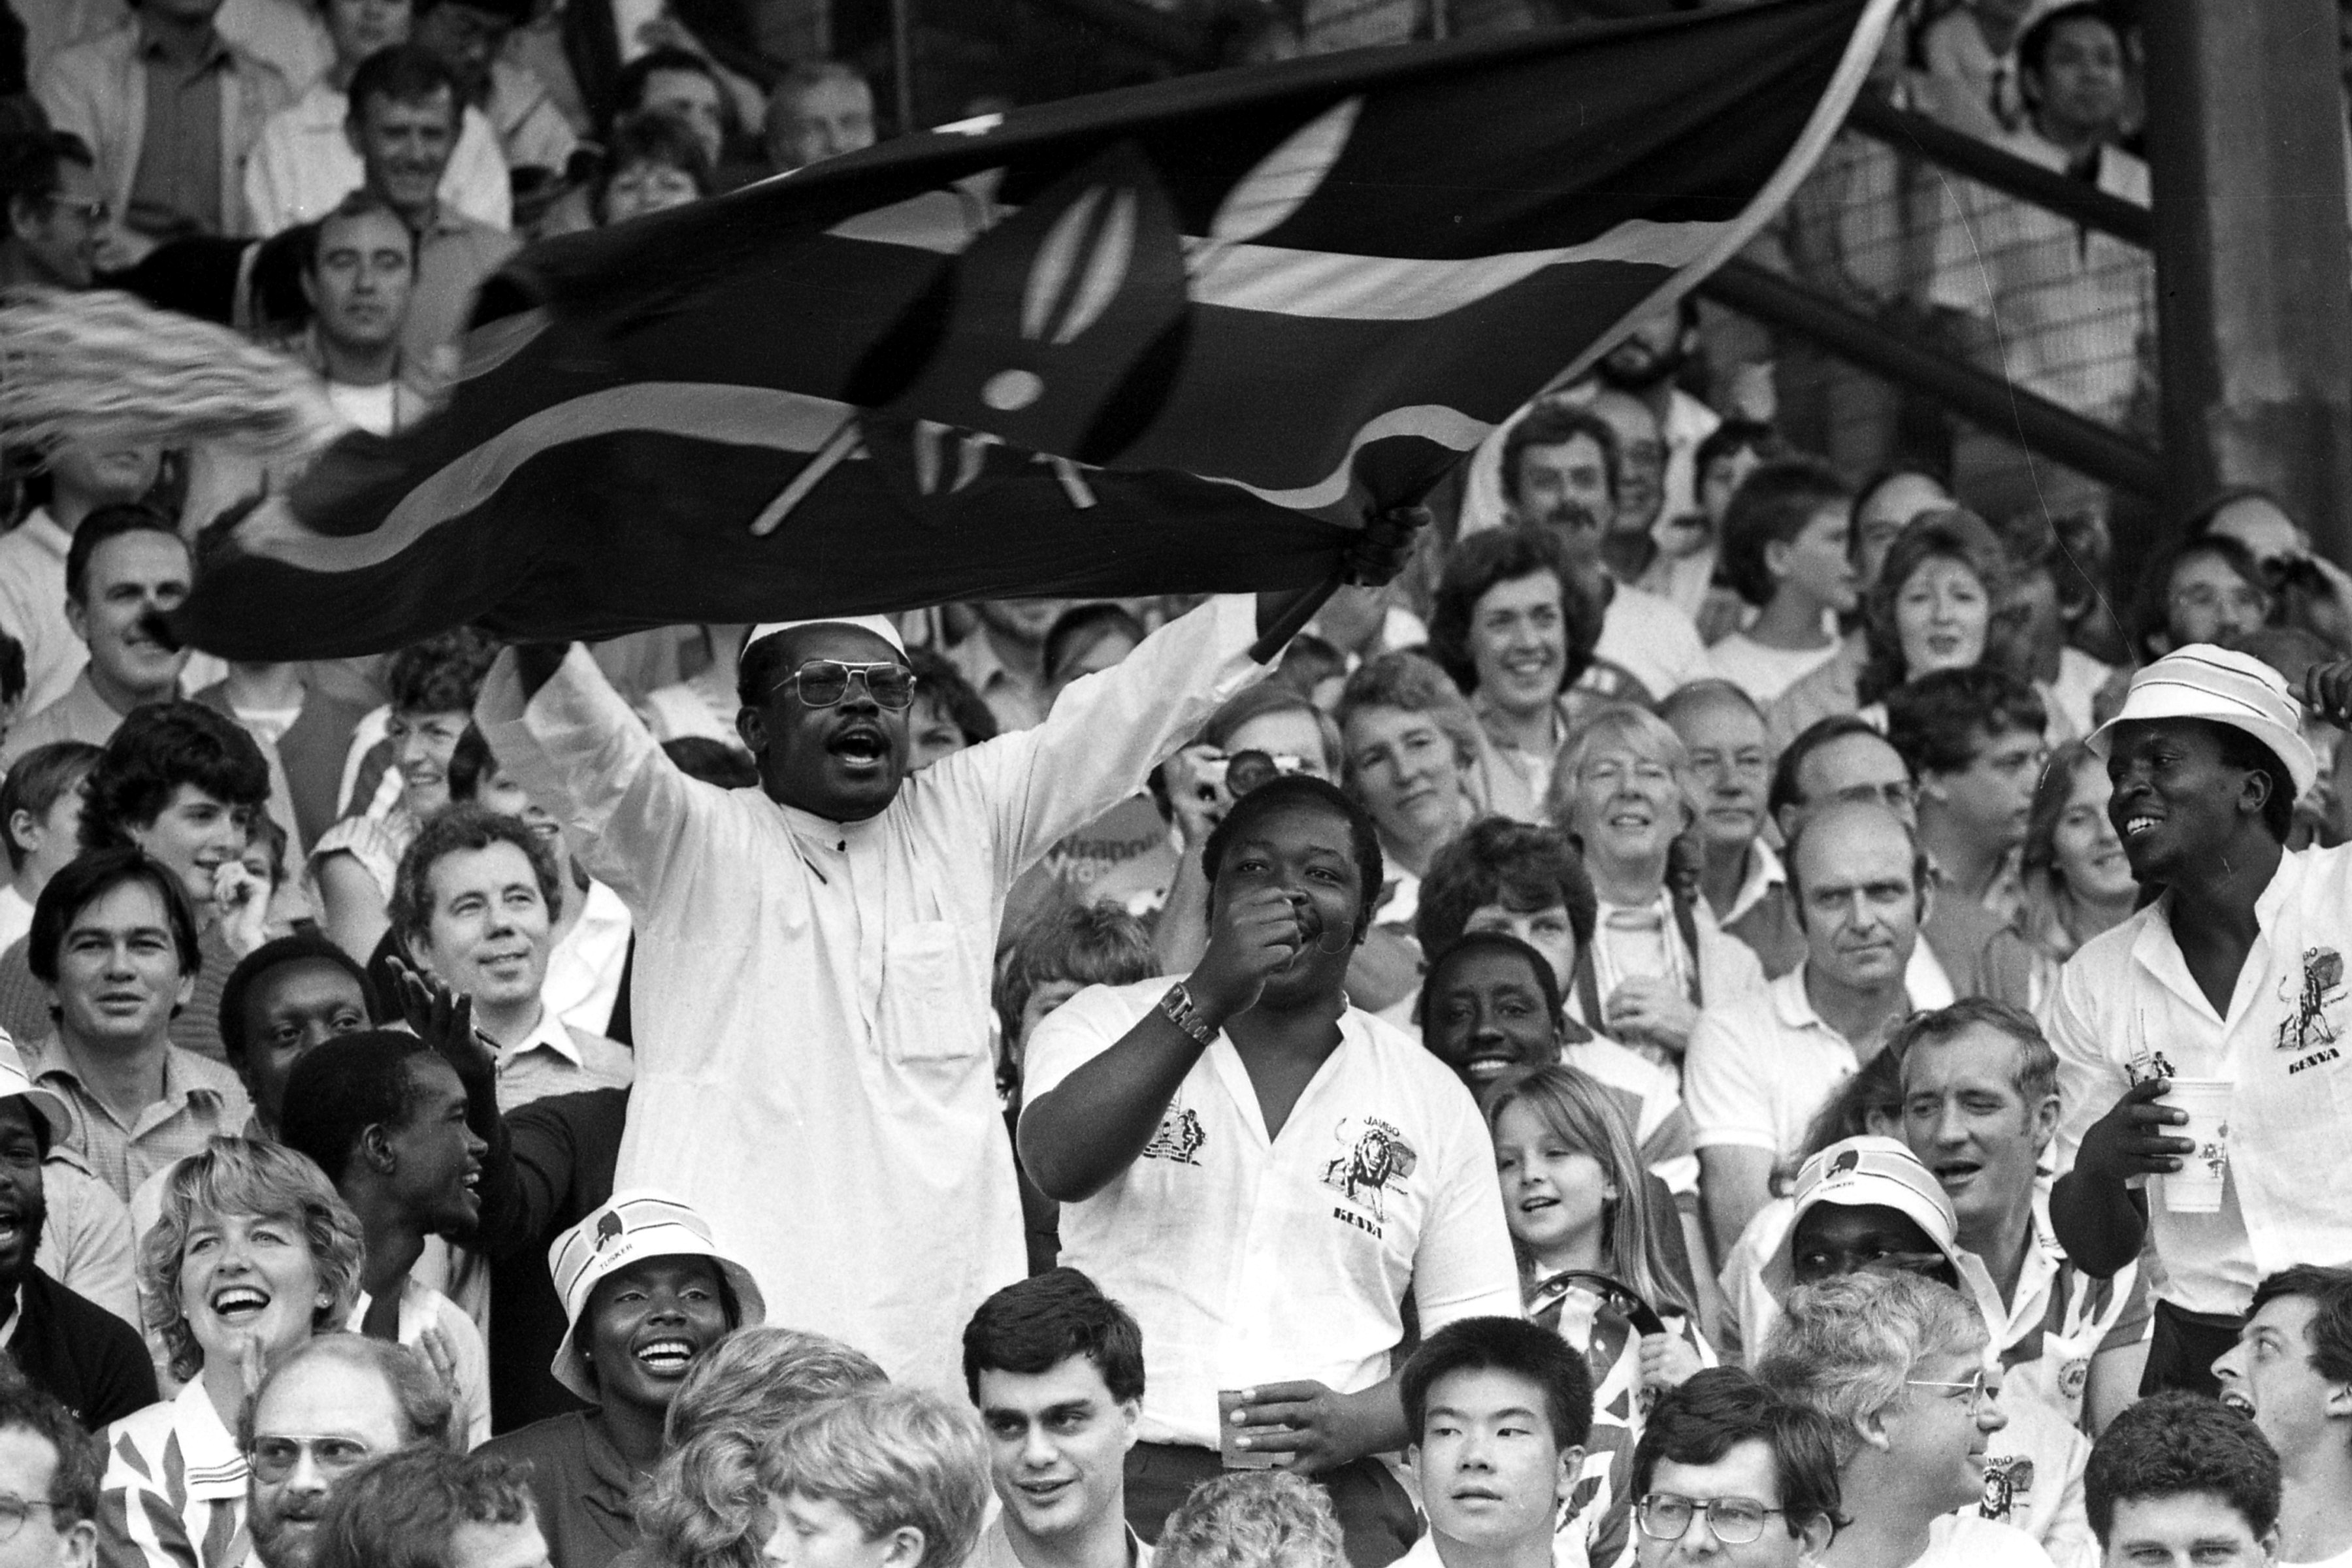 PHOTO 1: Kenya made their debut in 1986.